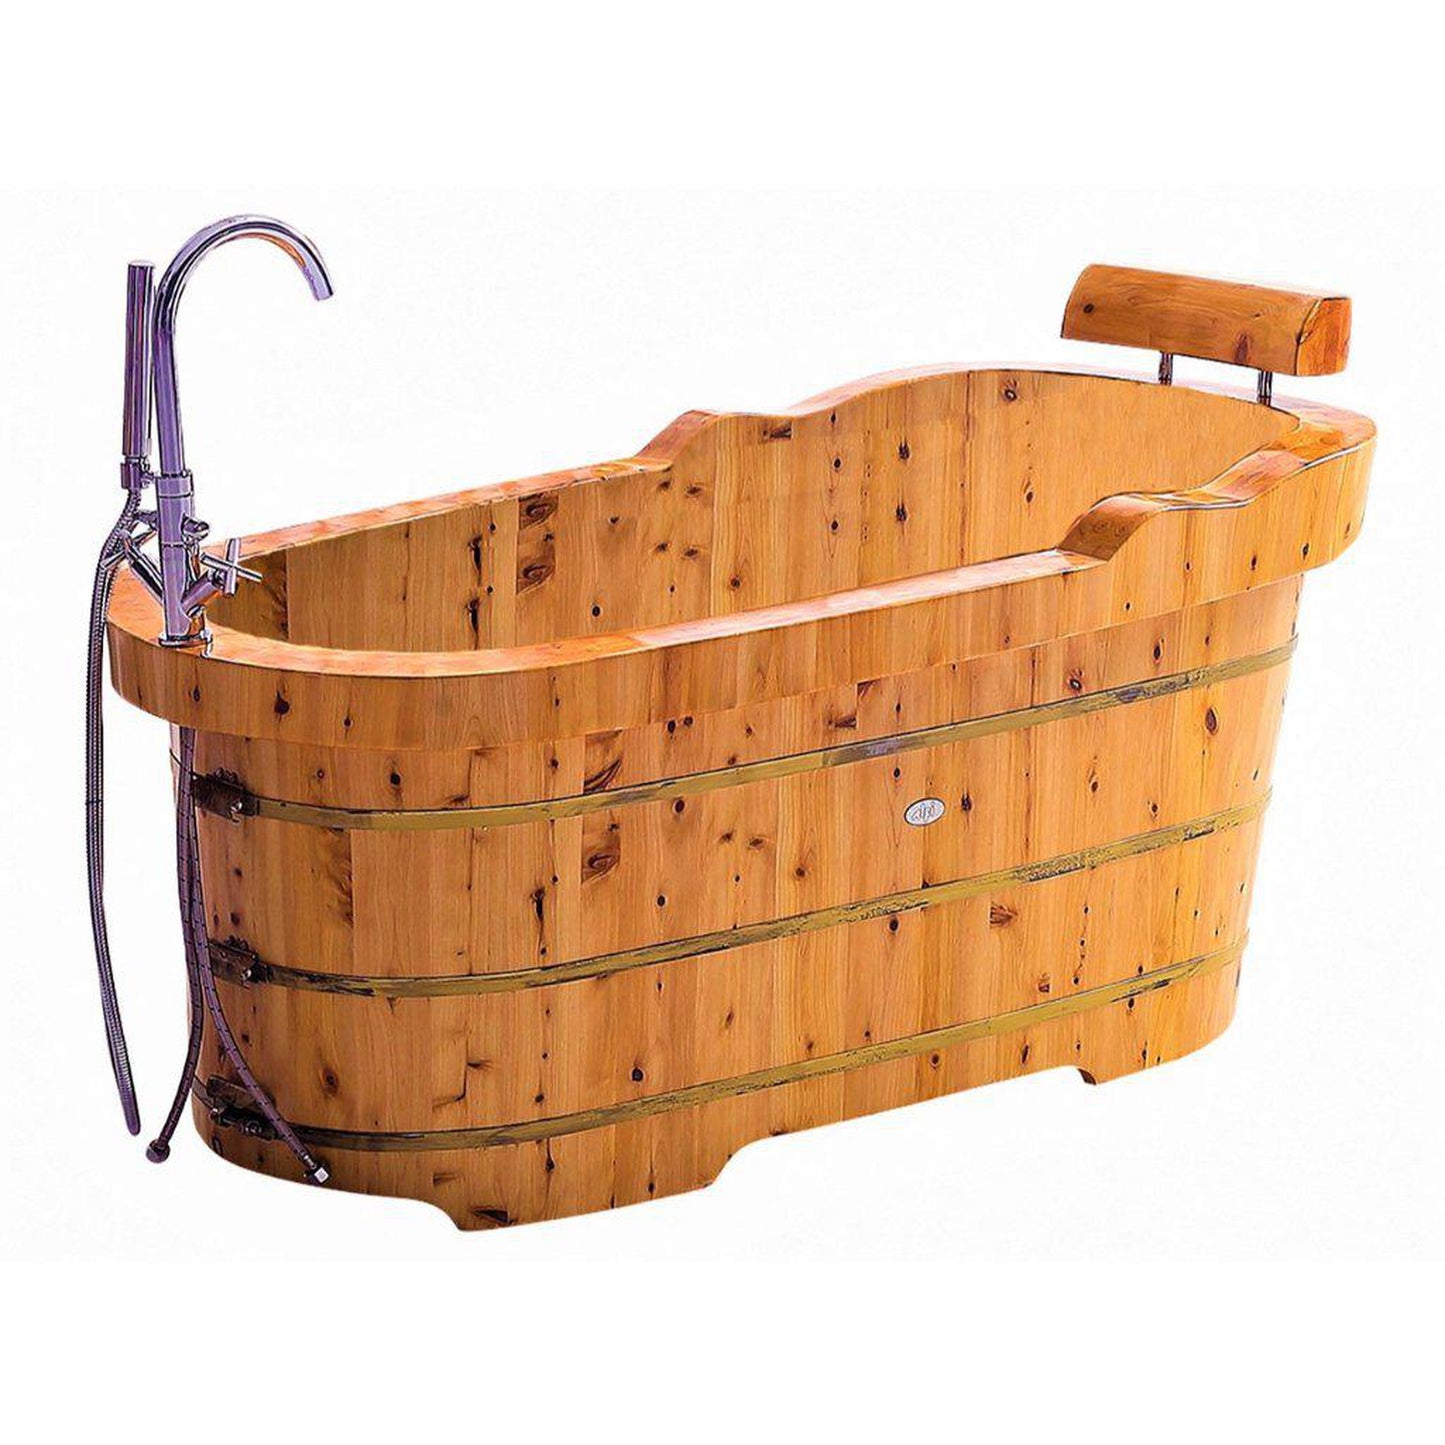 ALFI Brand AB1139 61" One Person Freestanding Soaking Cedar Wooden Bathtub With Fixtures & Headrest